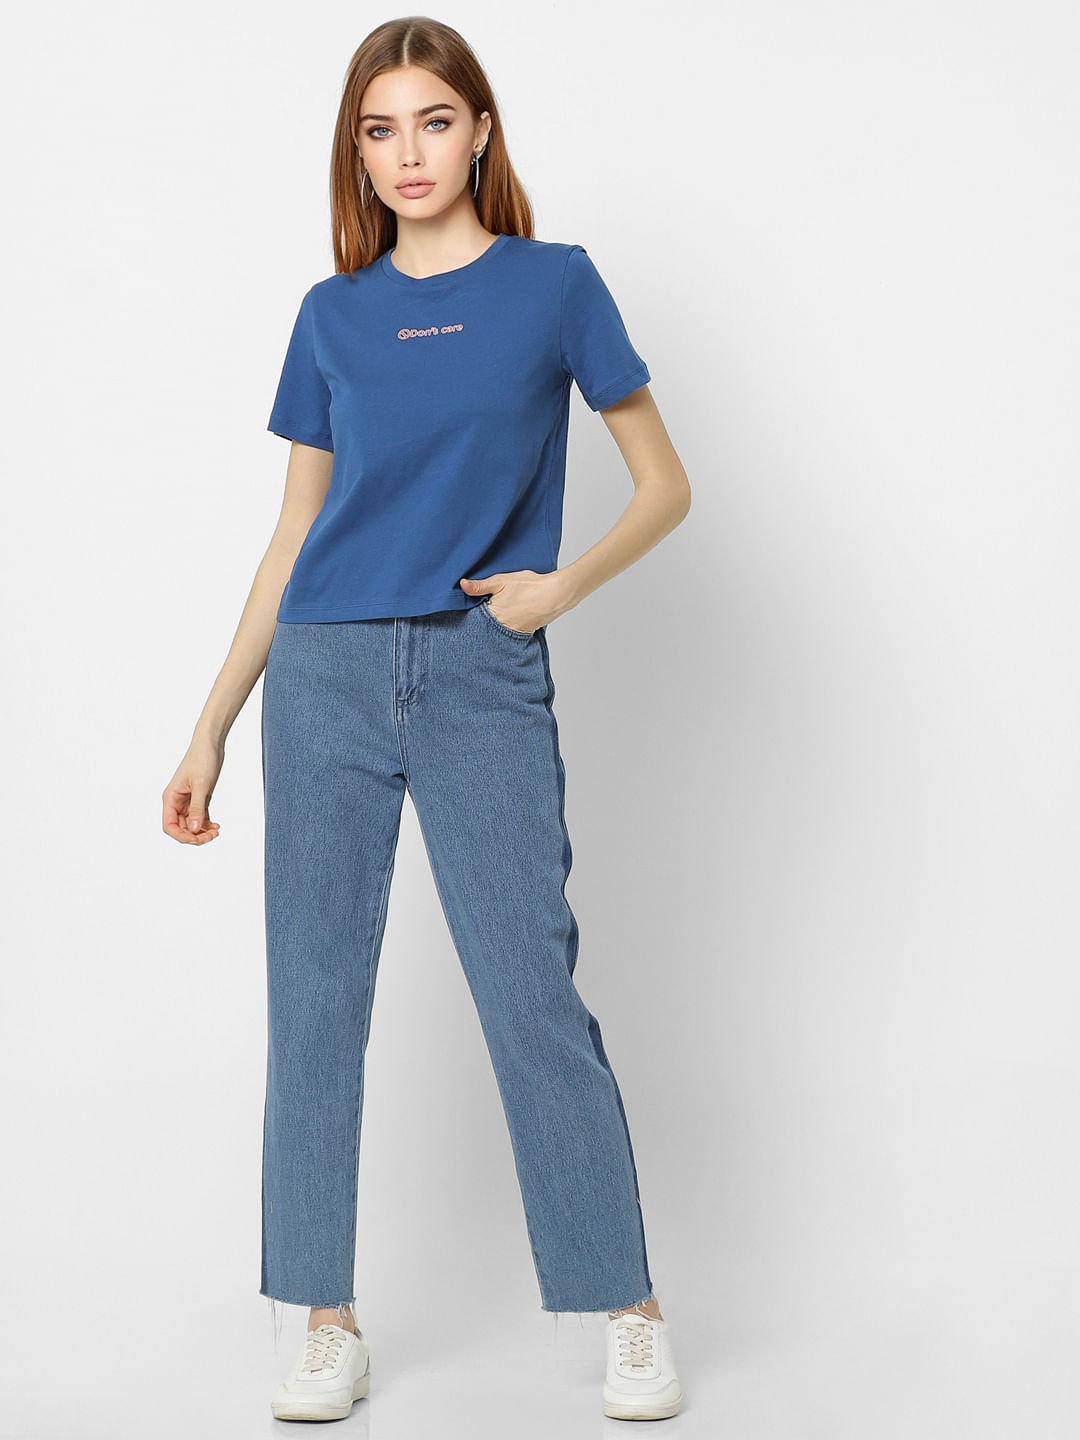 Blue S discount 66% Zara blouse WOMEN FASHION Shirts & T-shirts Blouse Sailor 